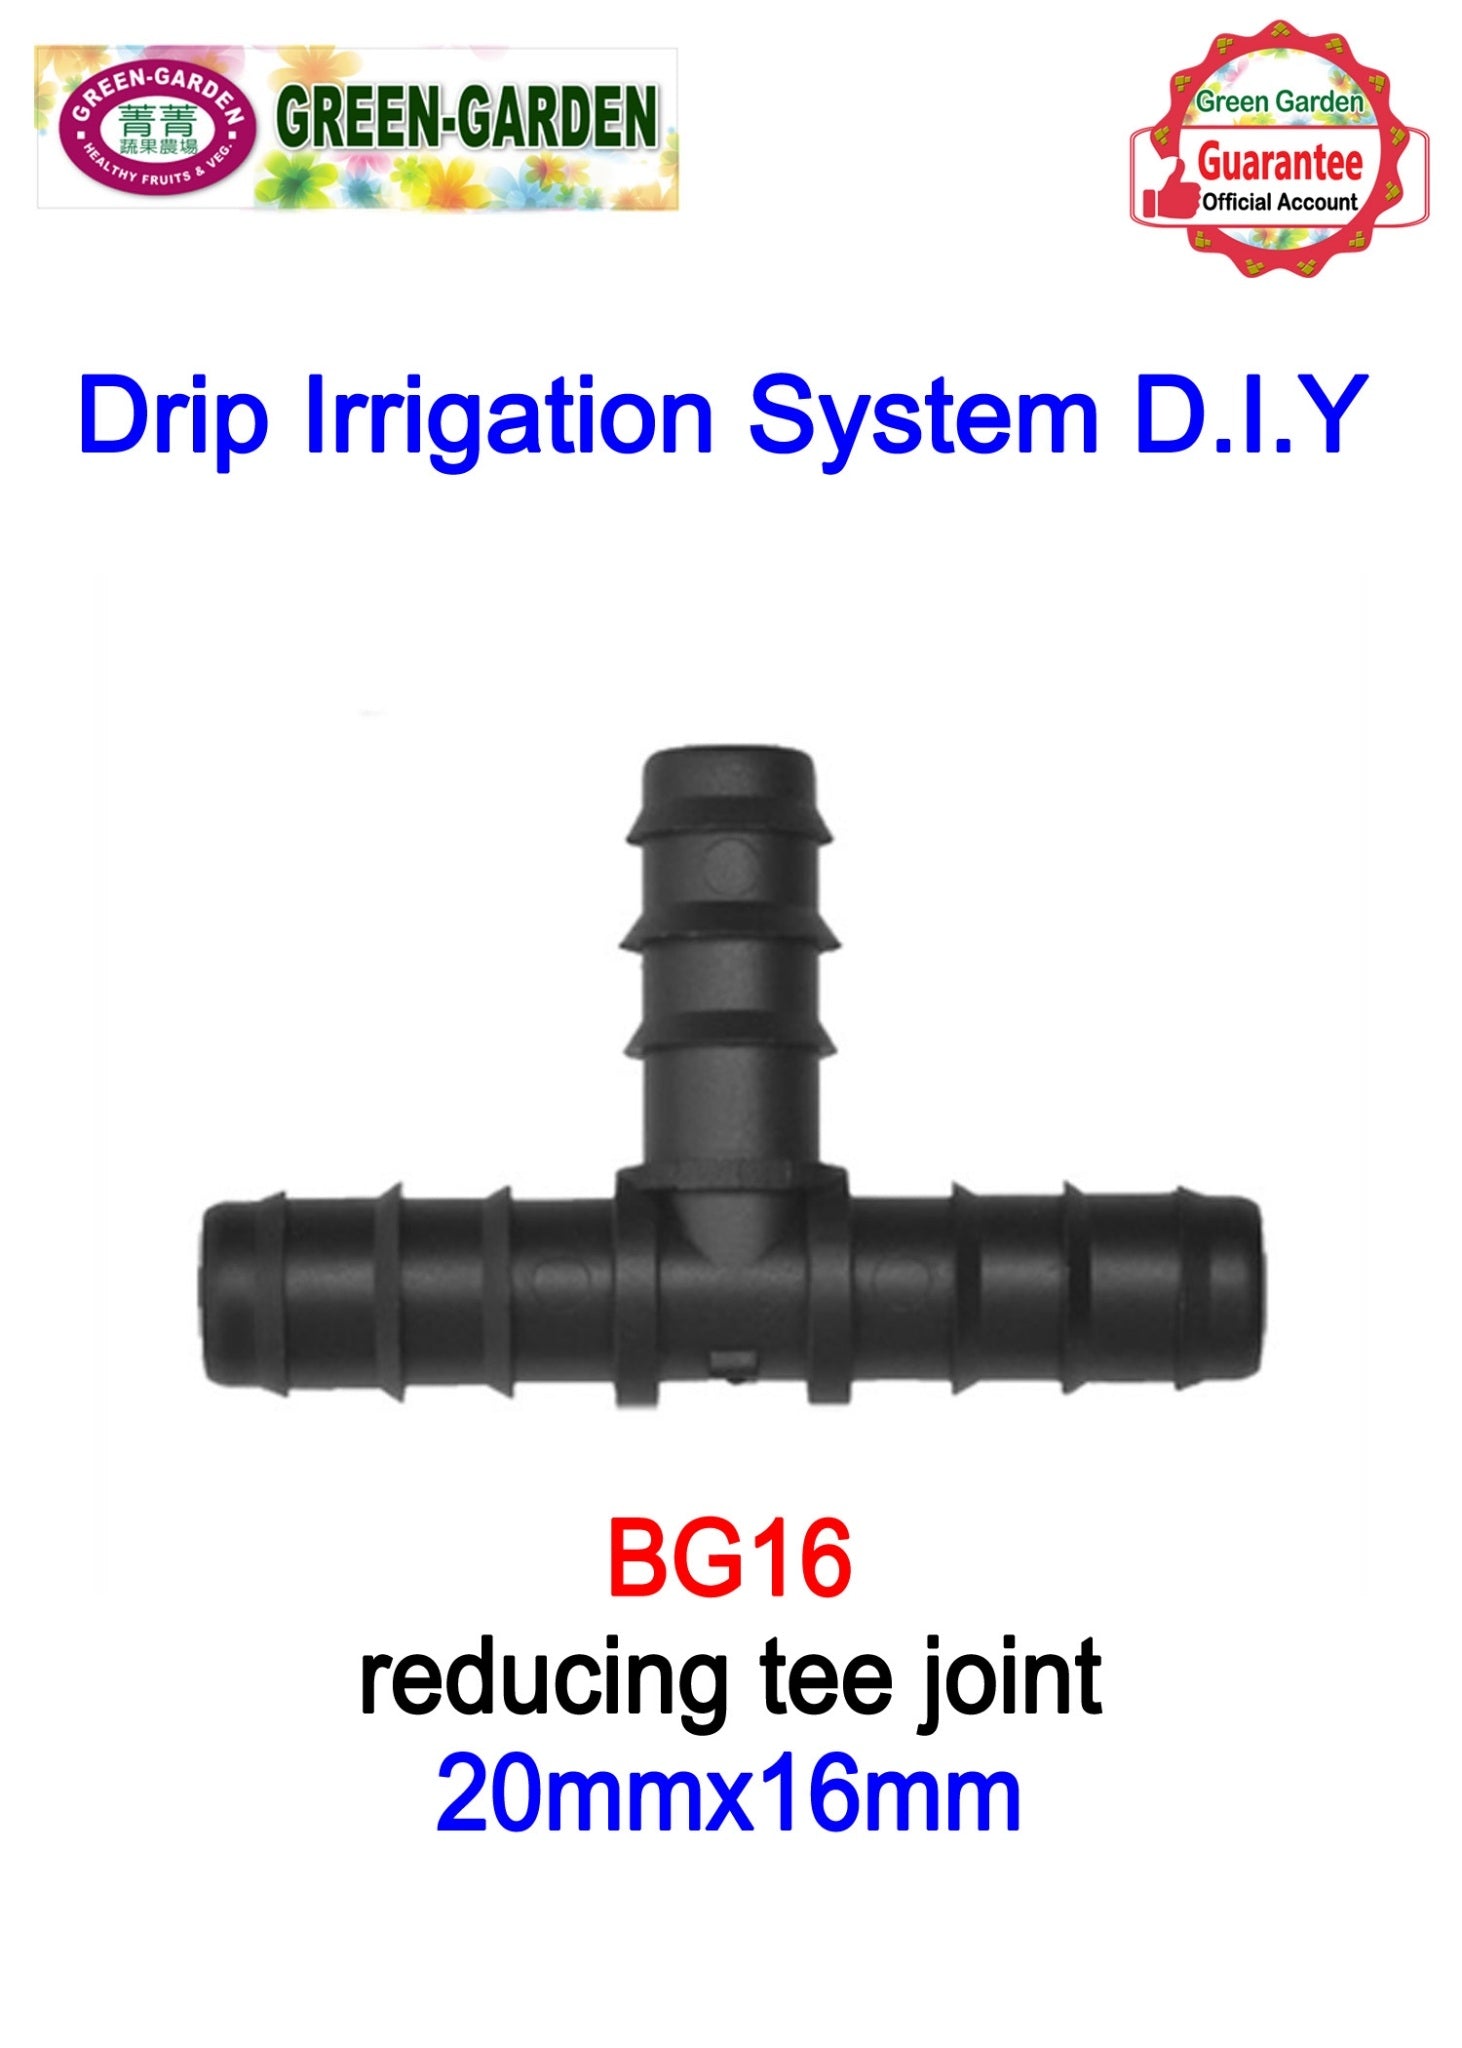 Drip Irrigation System - 20mm x 16mm reducing tee joint(2pcs) BG16